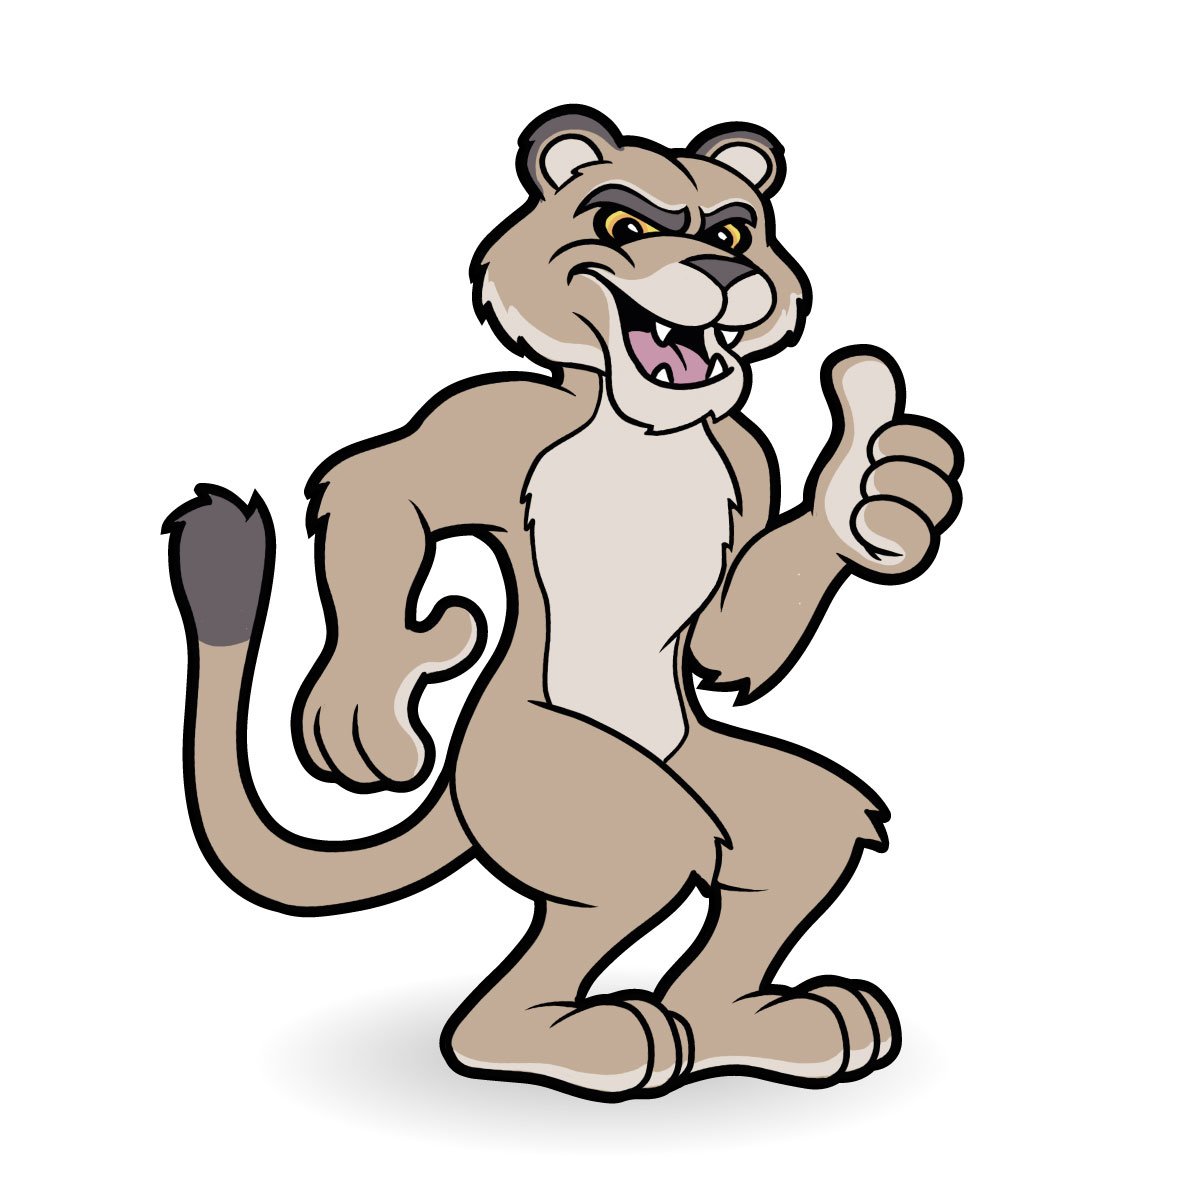 Cougar-Mascot-Character-Design-02.jpg